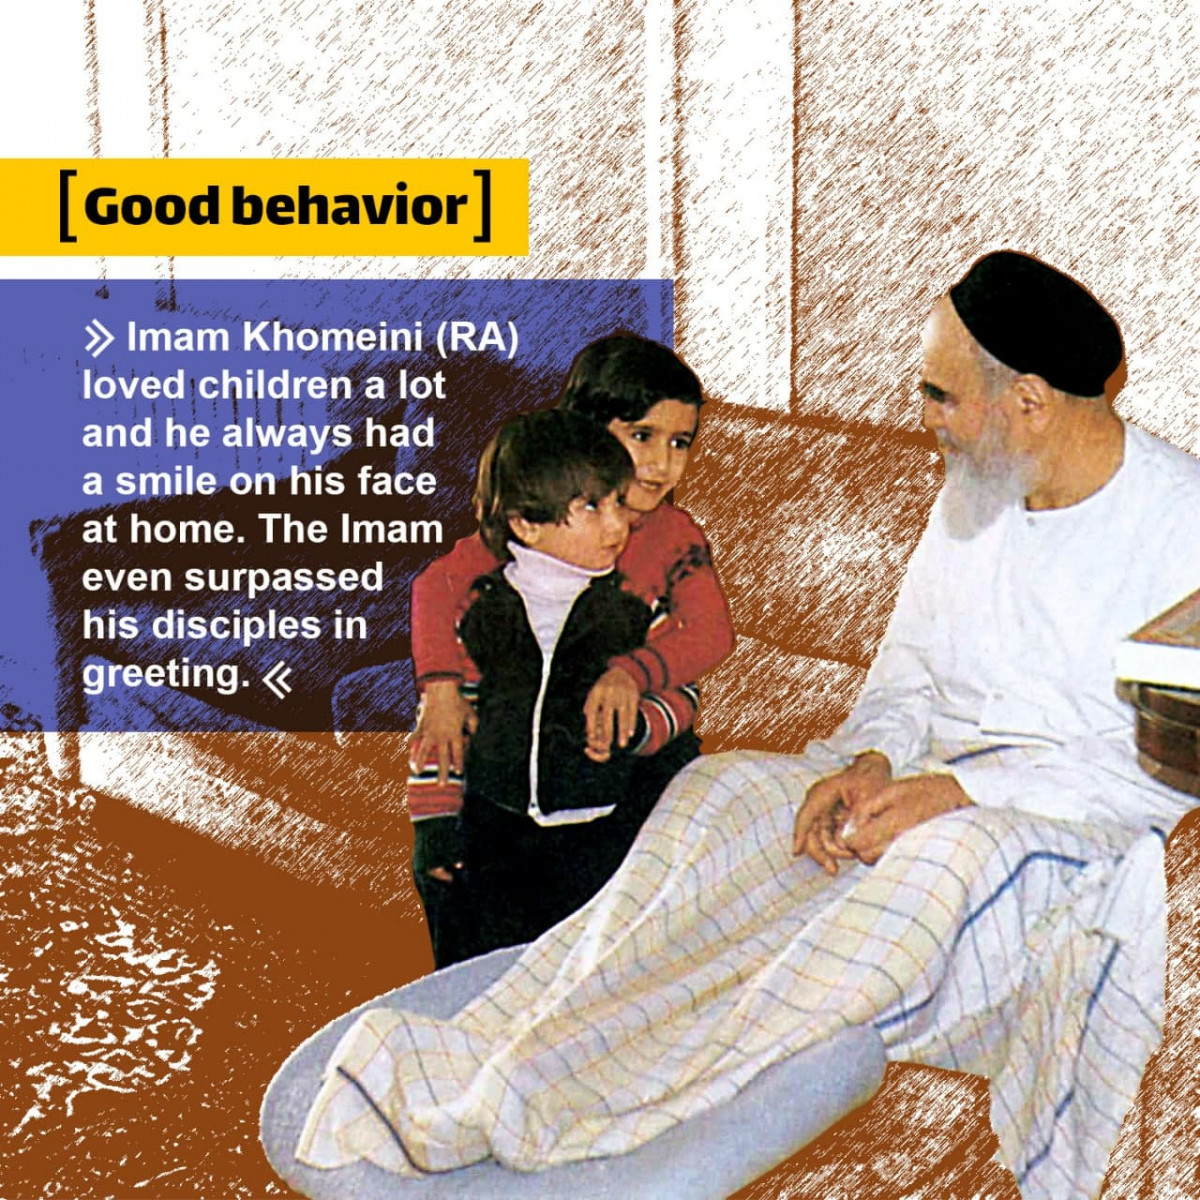 Good behavior